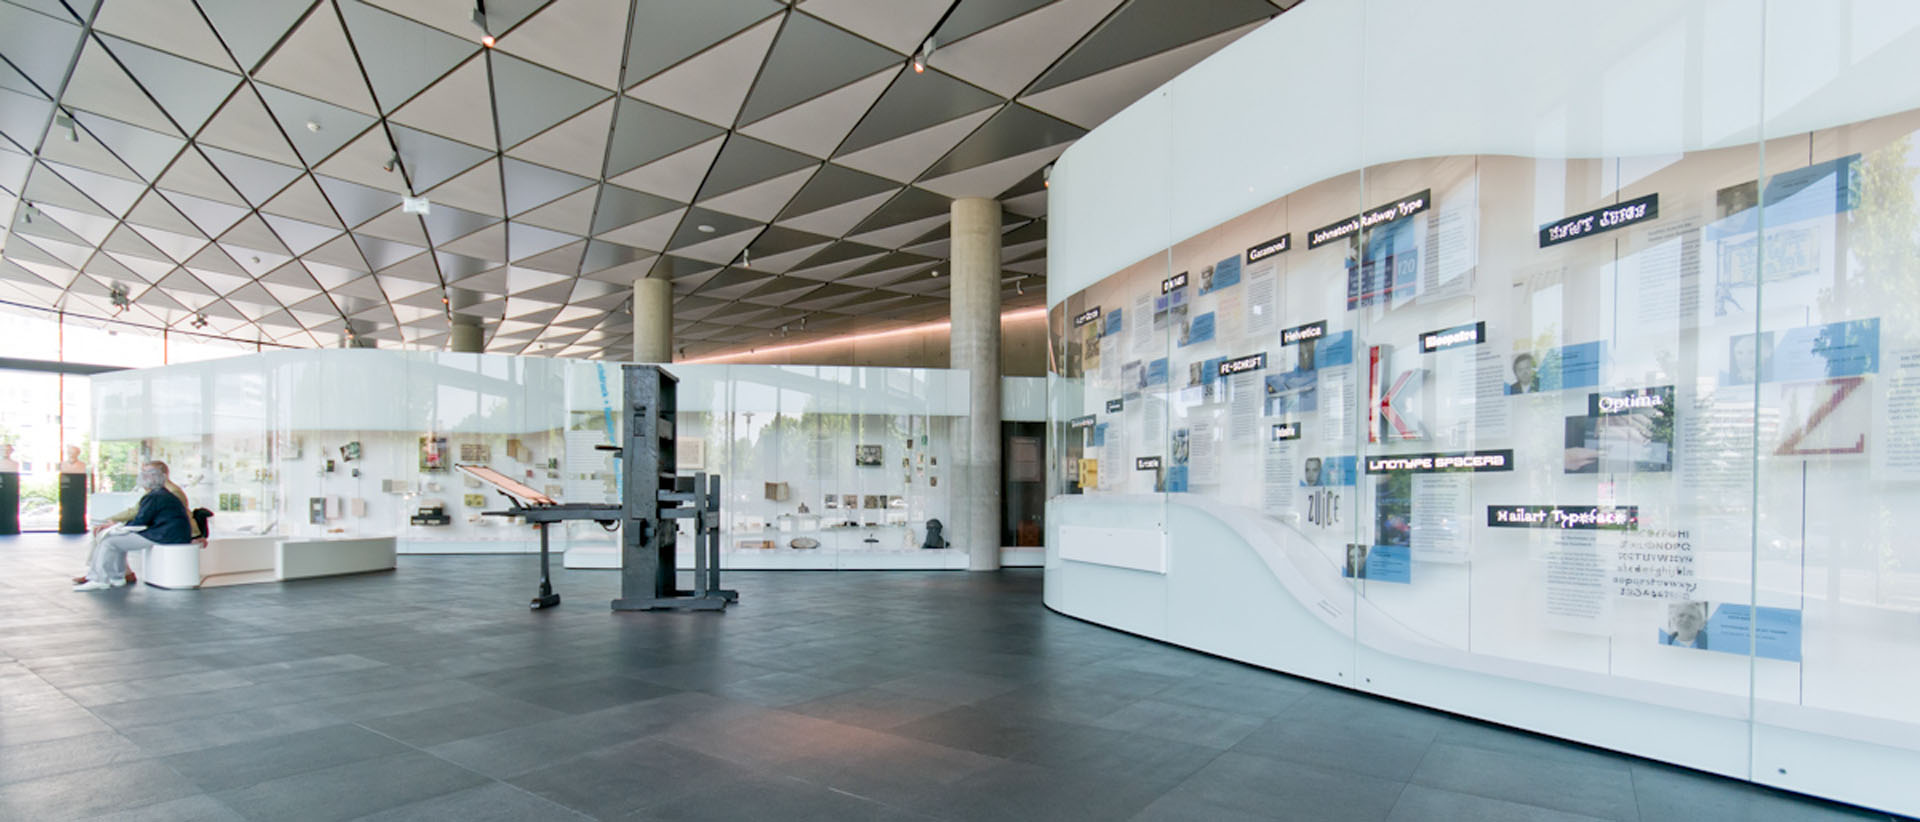 DNB Standort Leipzig library building architecture design interior view